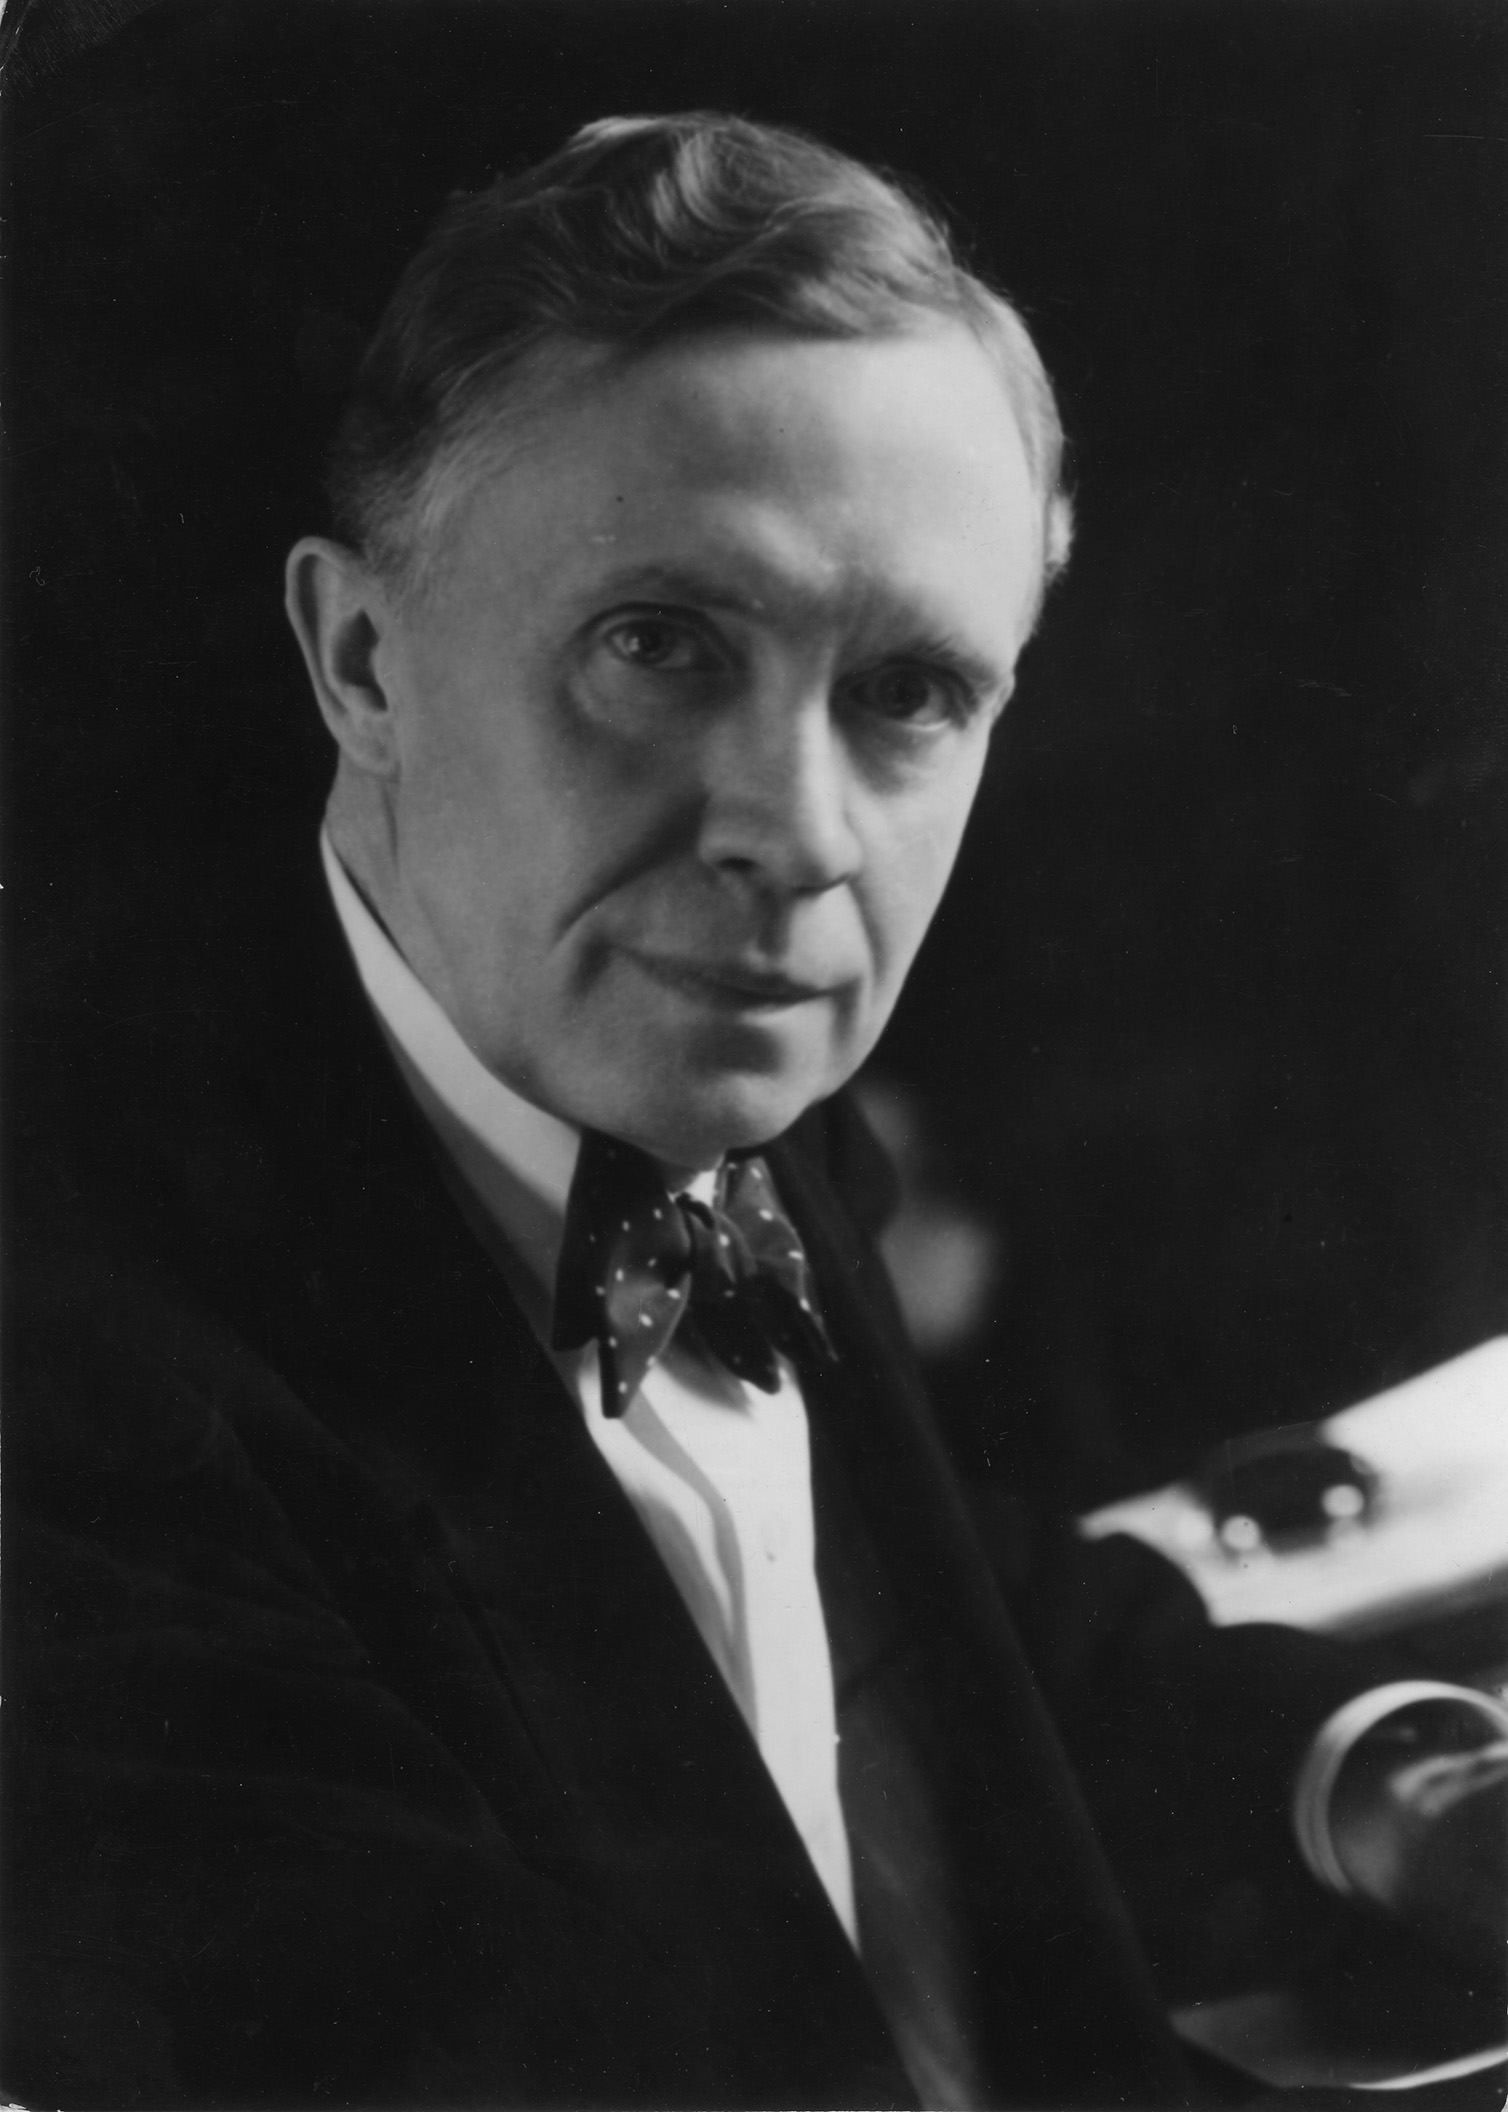 Arthur C. Willard, 1934-1946 U of I President, circa 1934